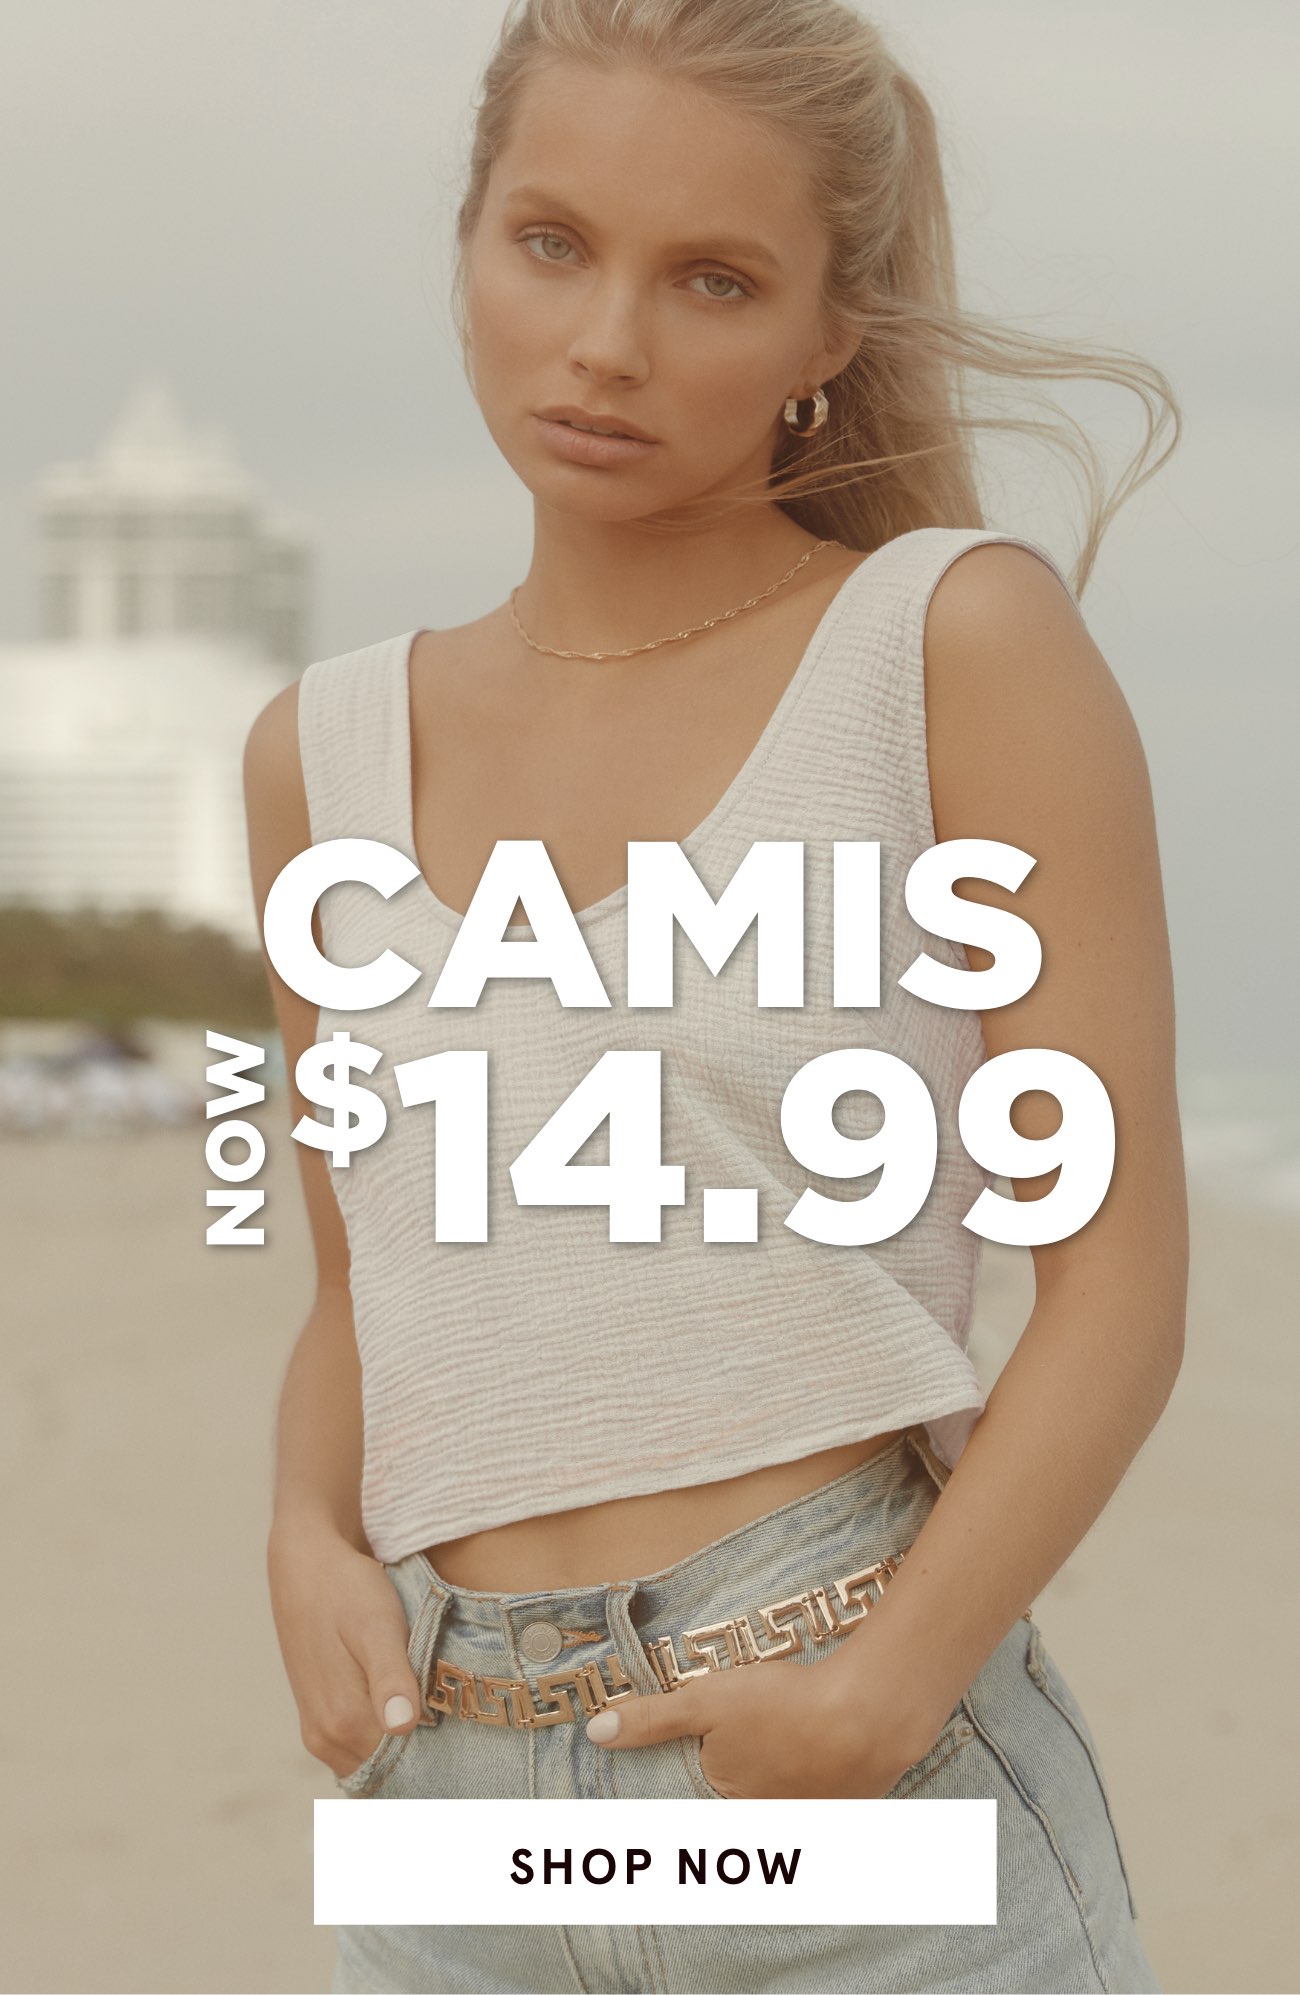 Shop Camis $14.99